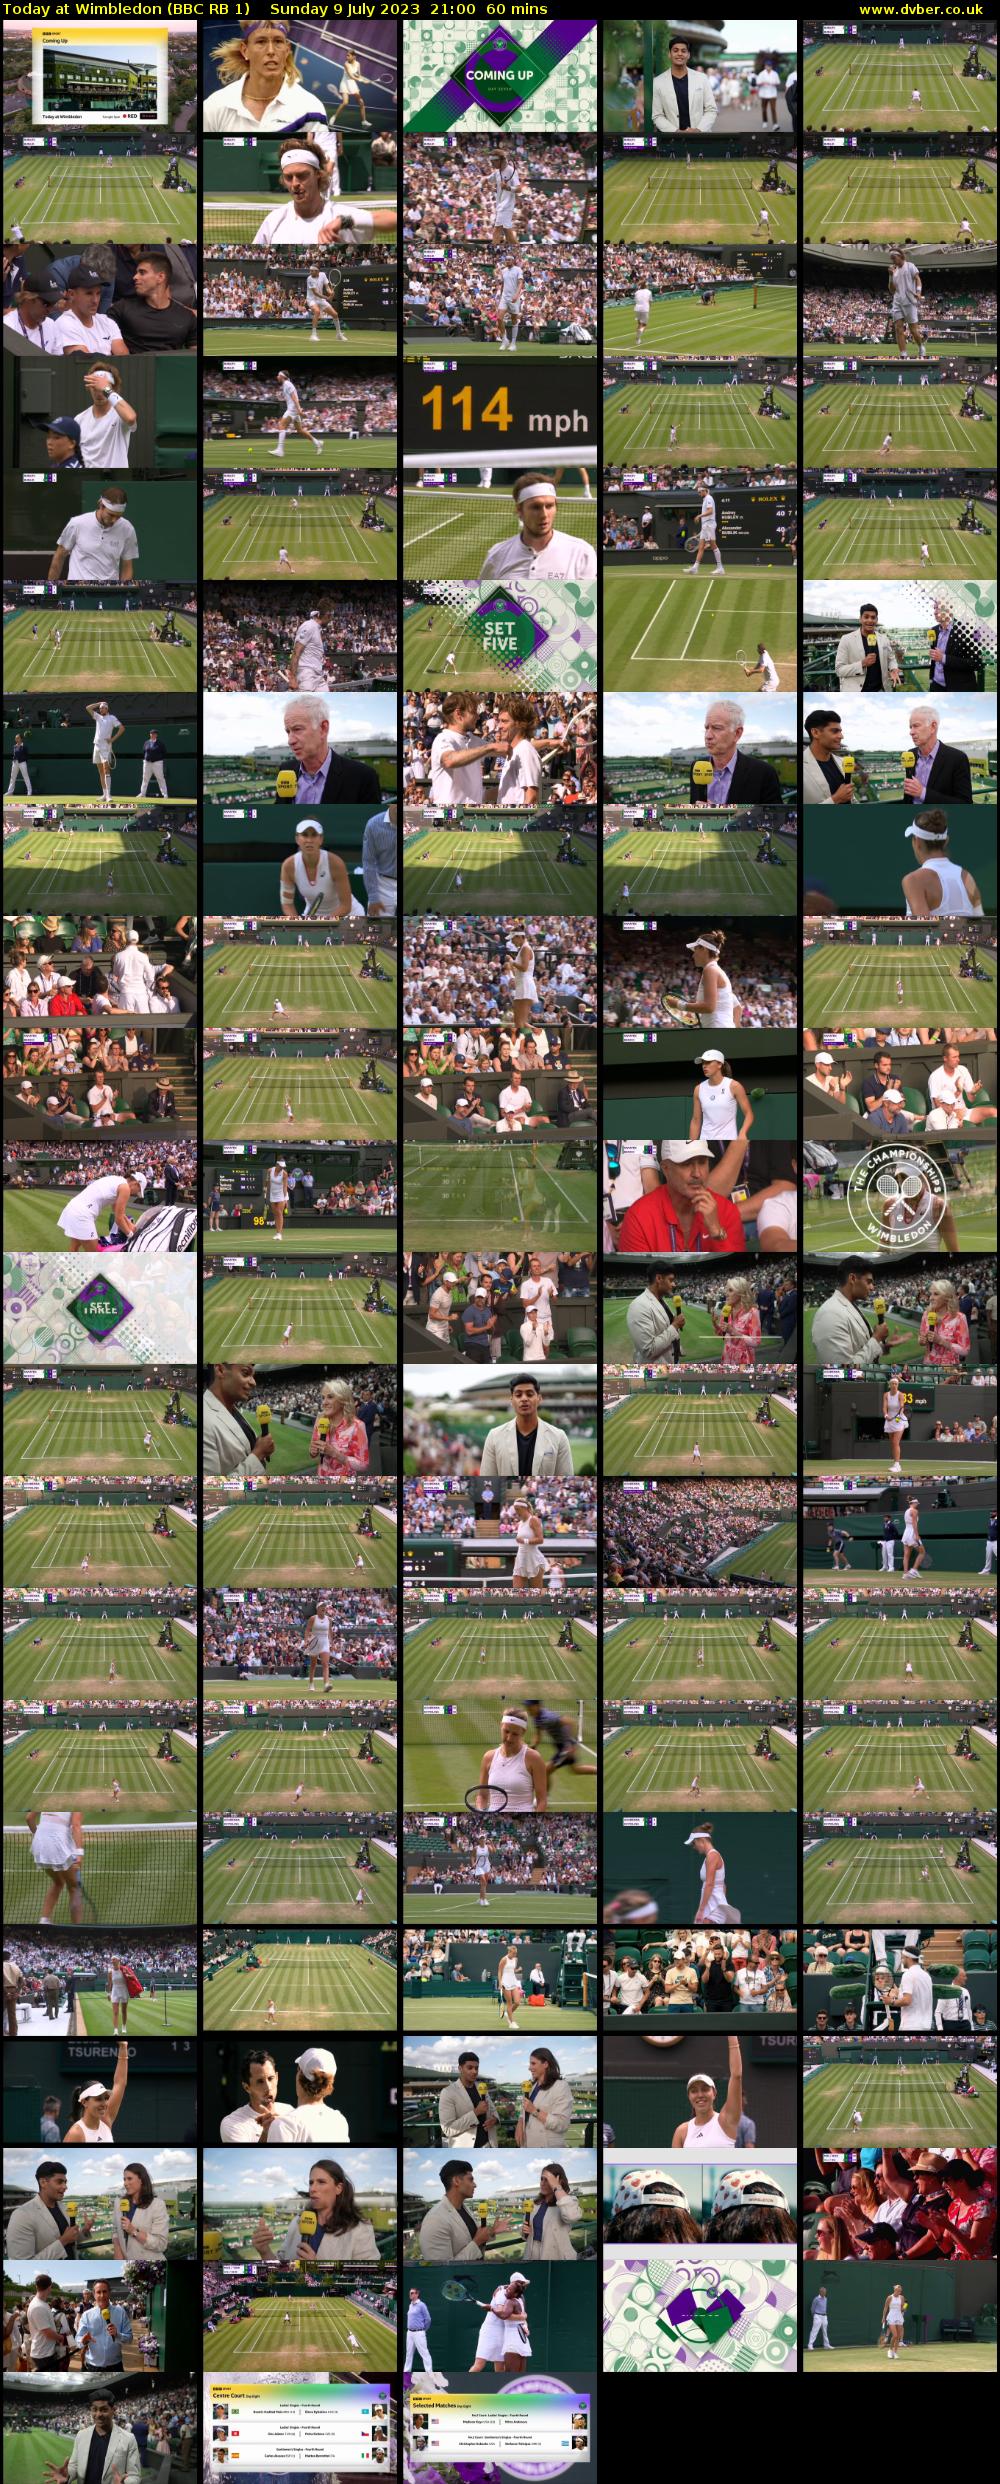 Today at Wimbledon (BBC RB 1) Sunday 9 July 2023 21:00 - 22:00